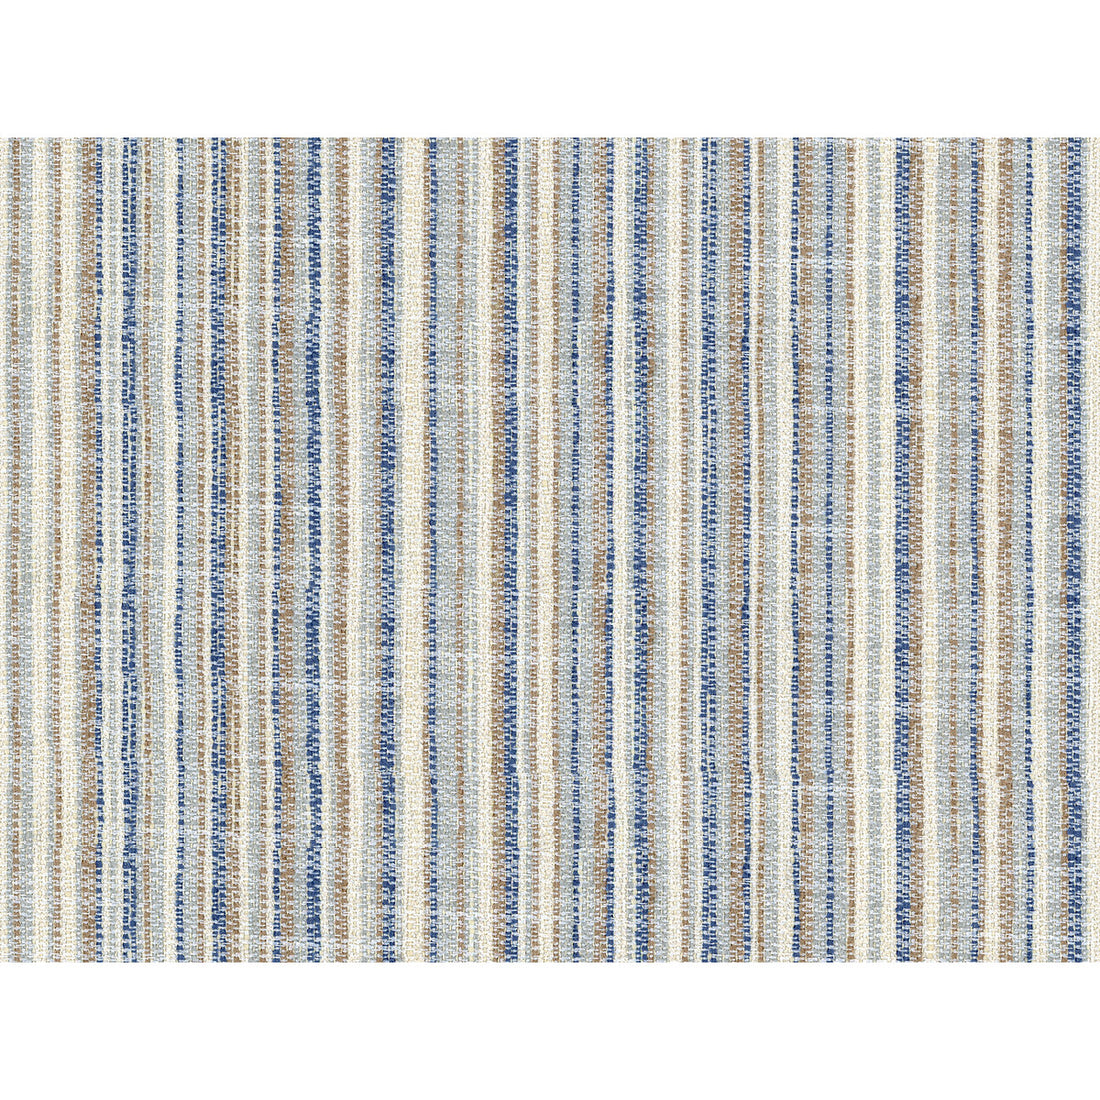 Kravet Smart fabric in 34309-516 color - pattern 34309.516.0 - by Kravet Smart